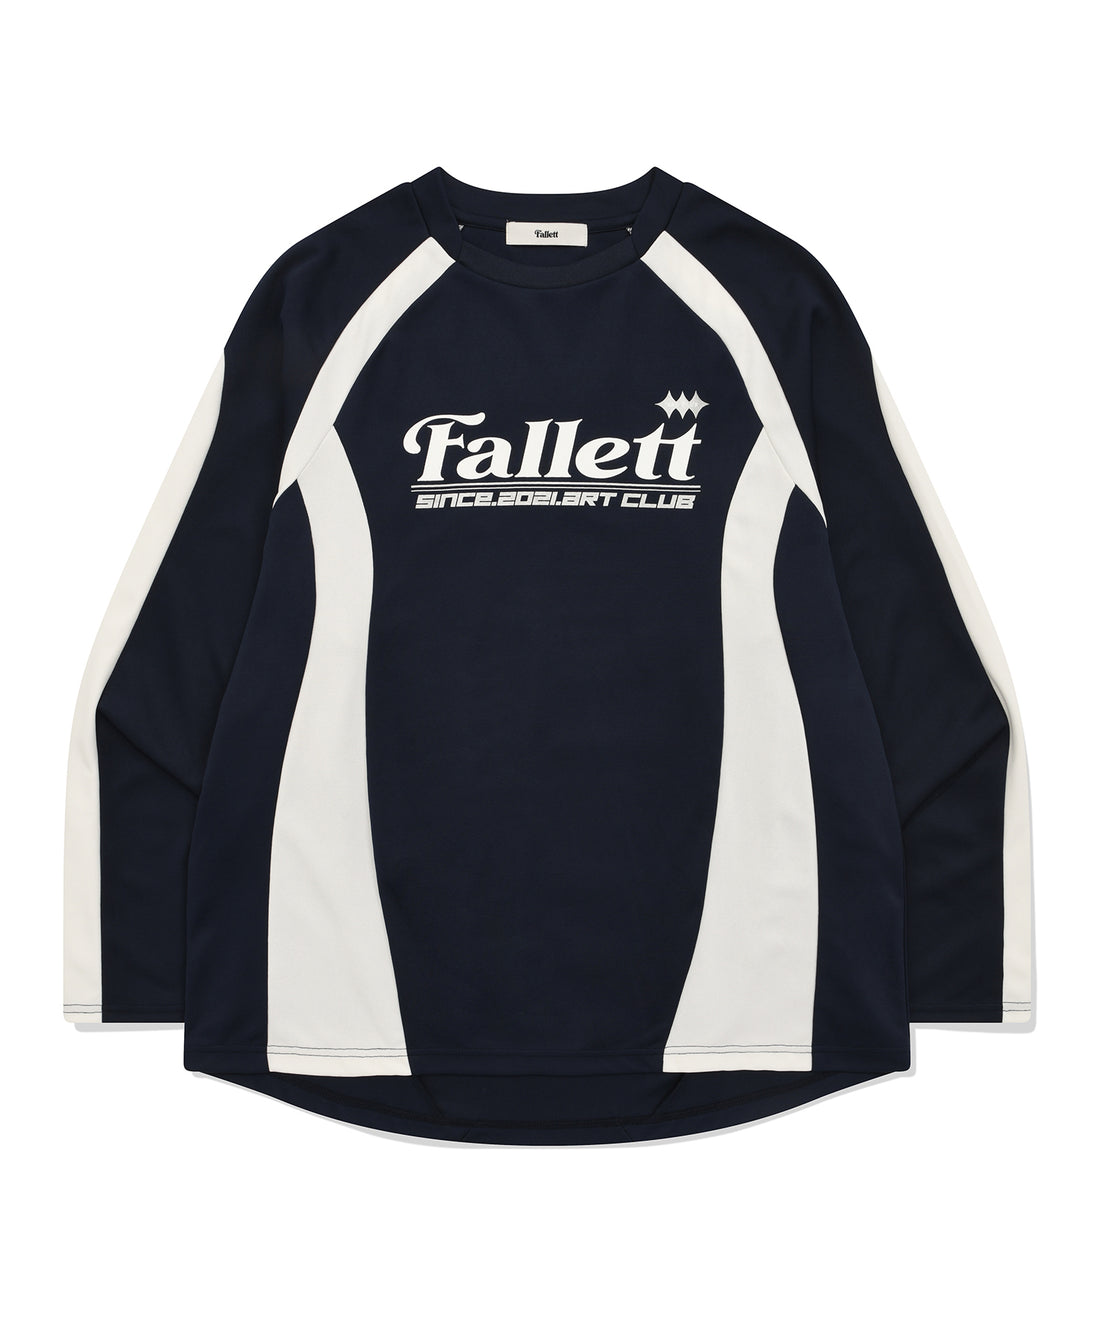 FALLETT Sports Club Football Jersey Long Sleeve Navy